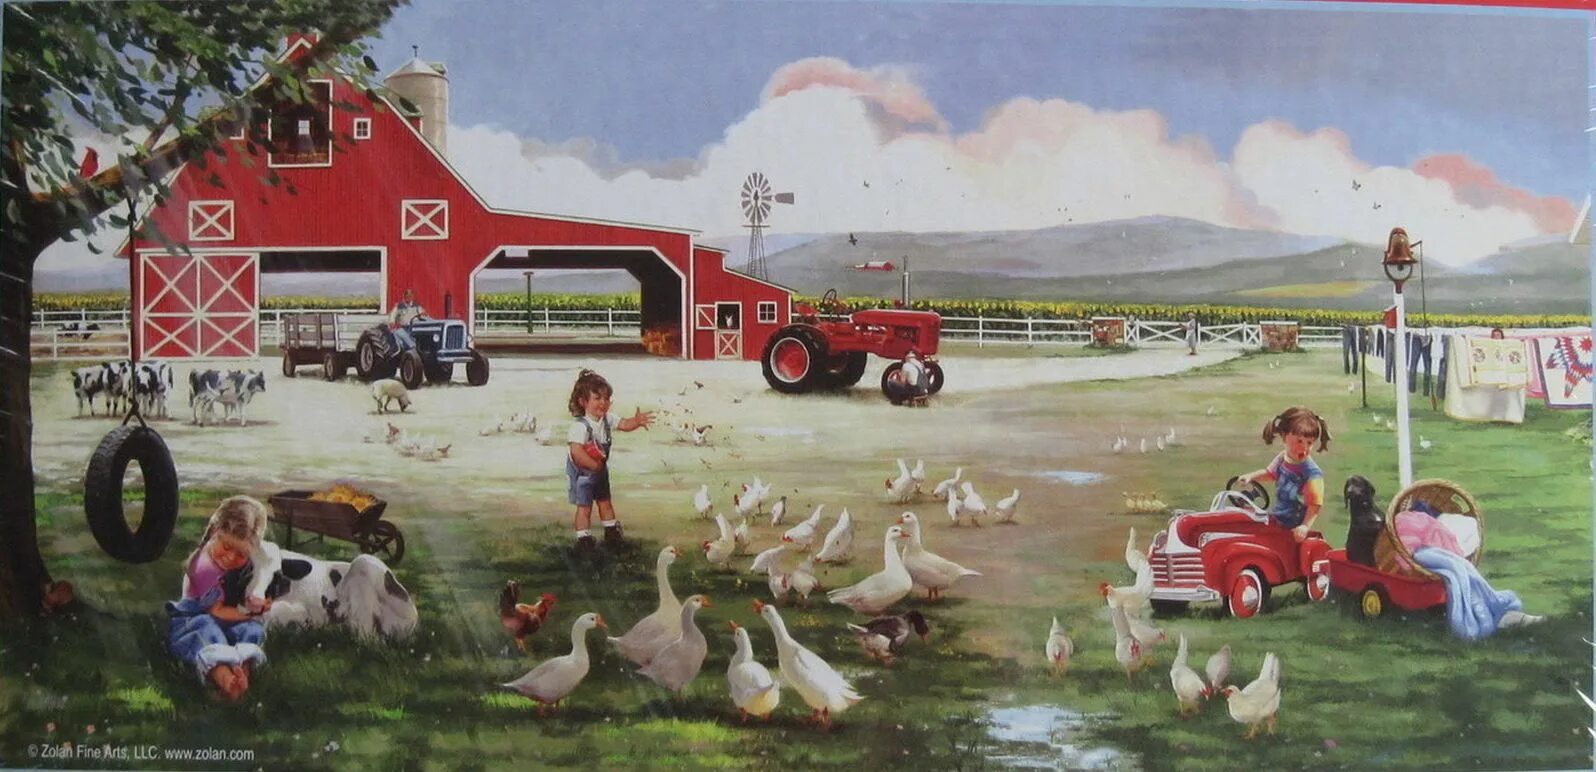 He lives on the farm. Картины Дональда Золана беззаботное детство. Ферма картина. Donald Zolan картины дети.